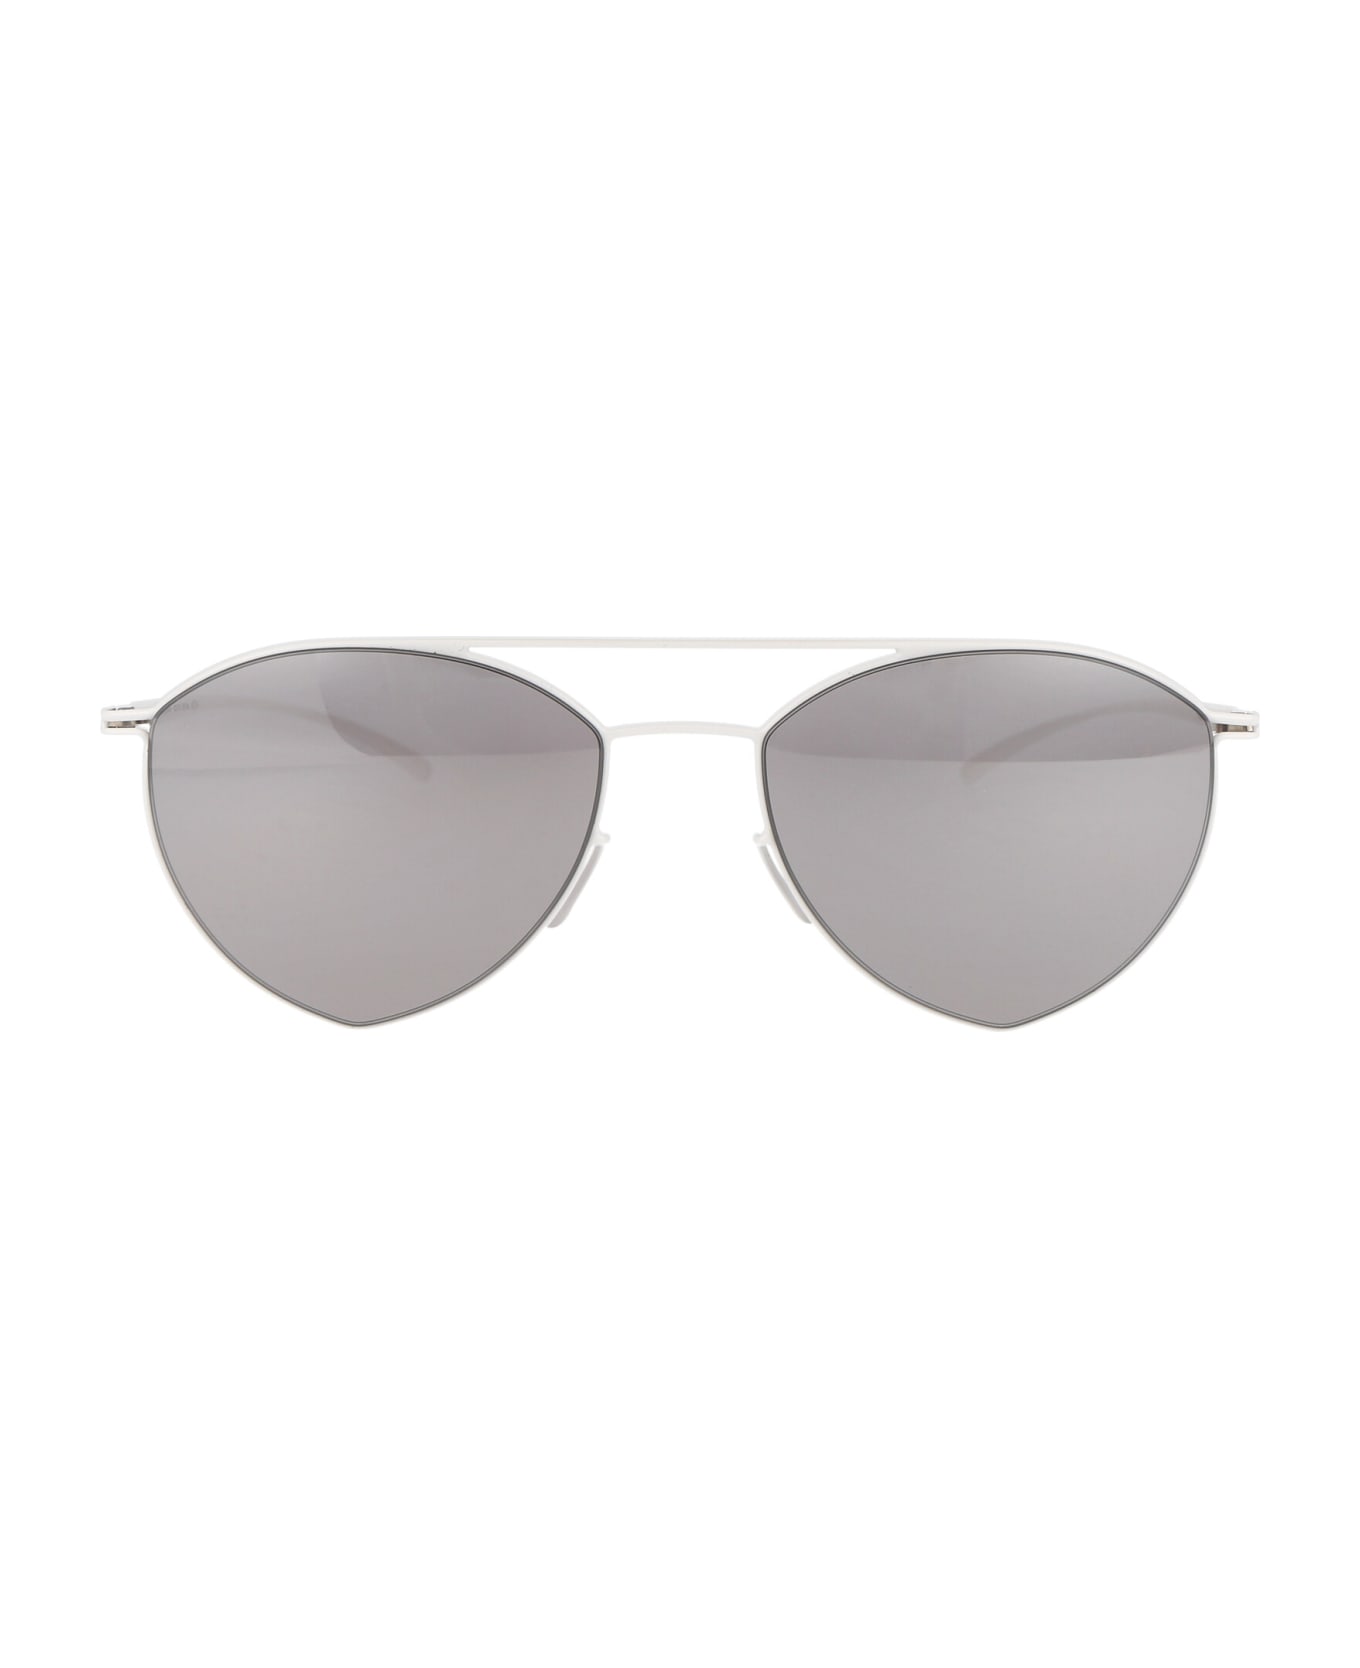 Mykita Mmesse010 Sunglasses - 333 E13 White Warm Grey Flash サングラス